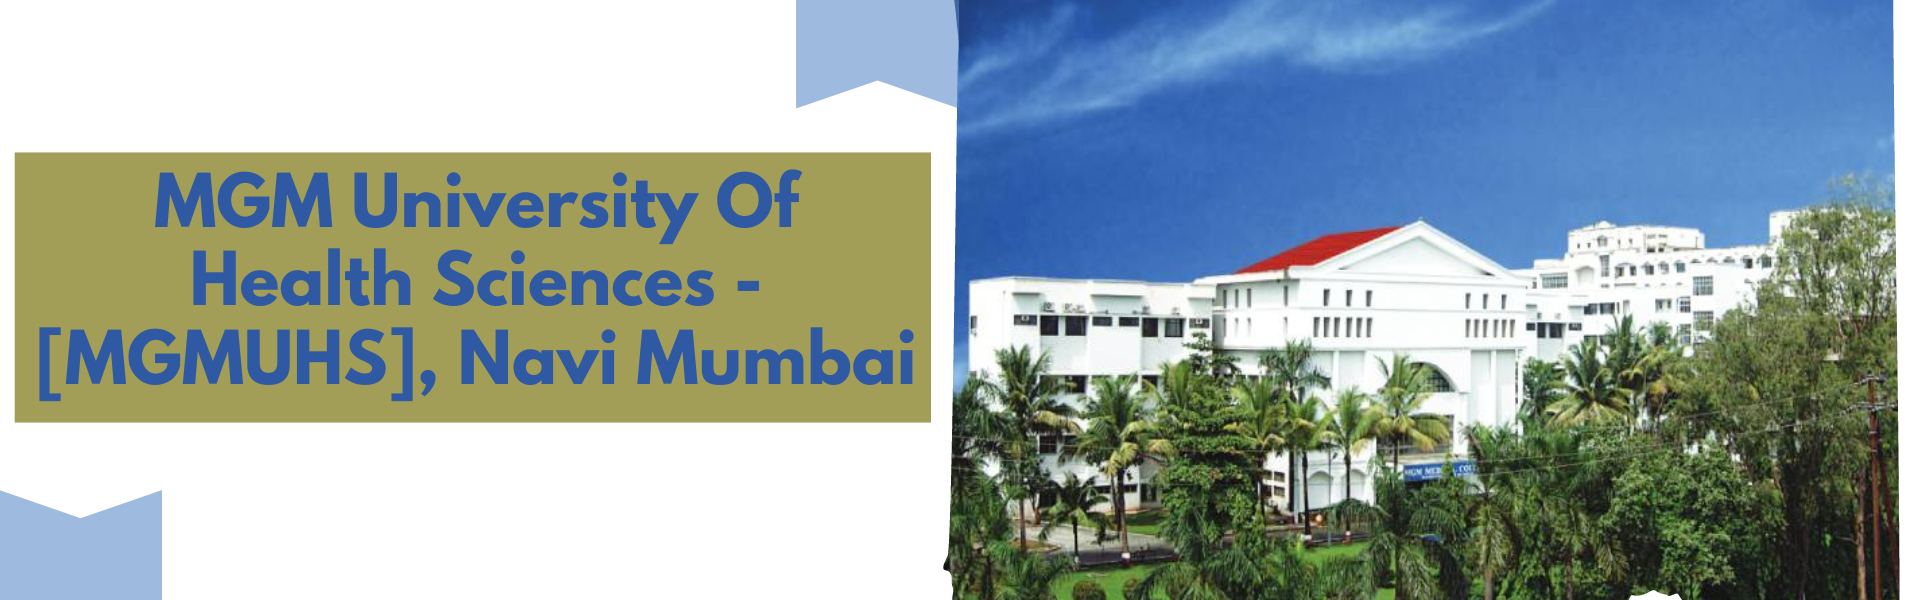 MGM University Of Health Sciences - [MGMUHS], Navi Mumbai